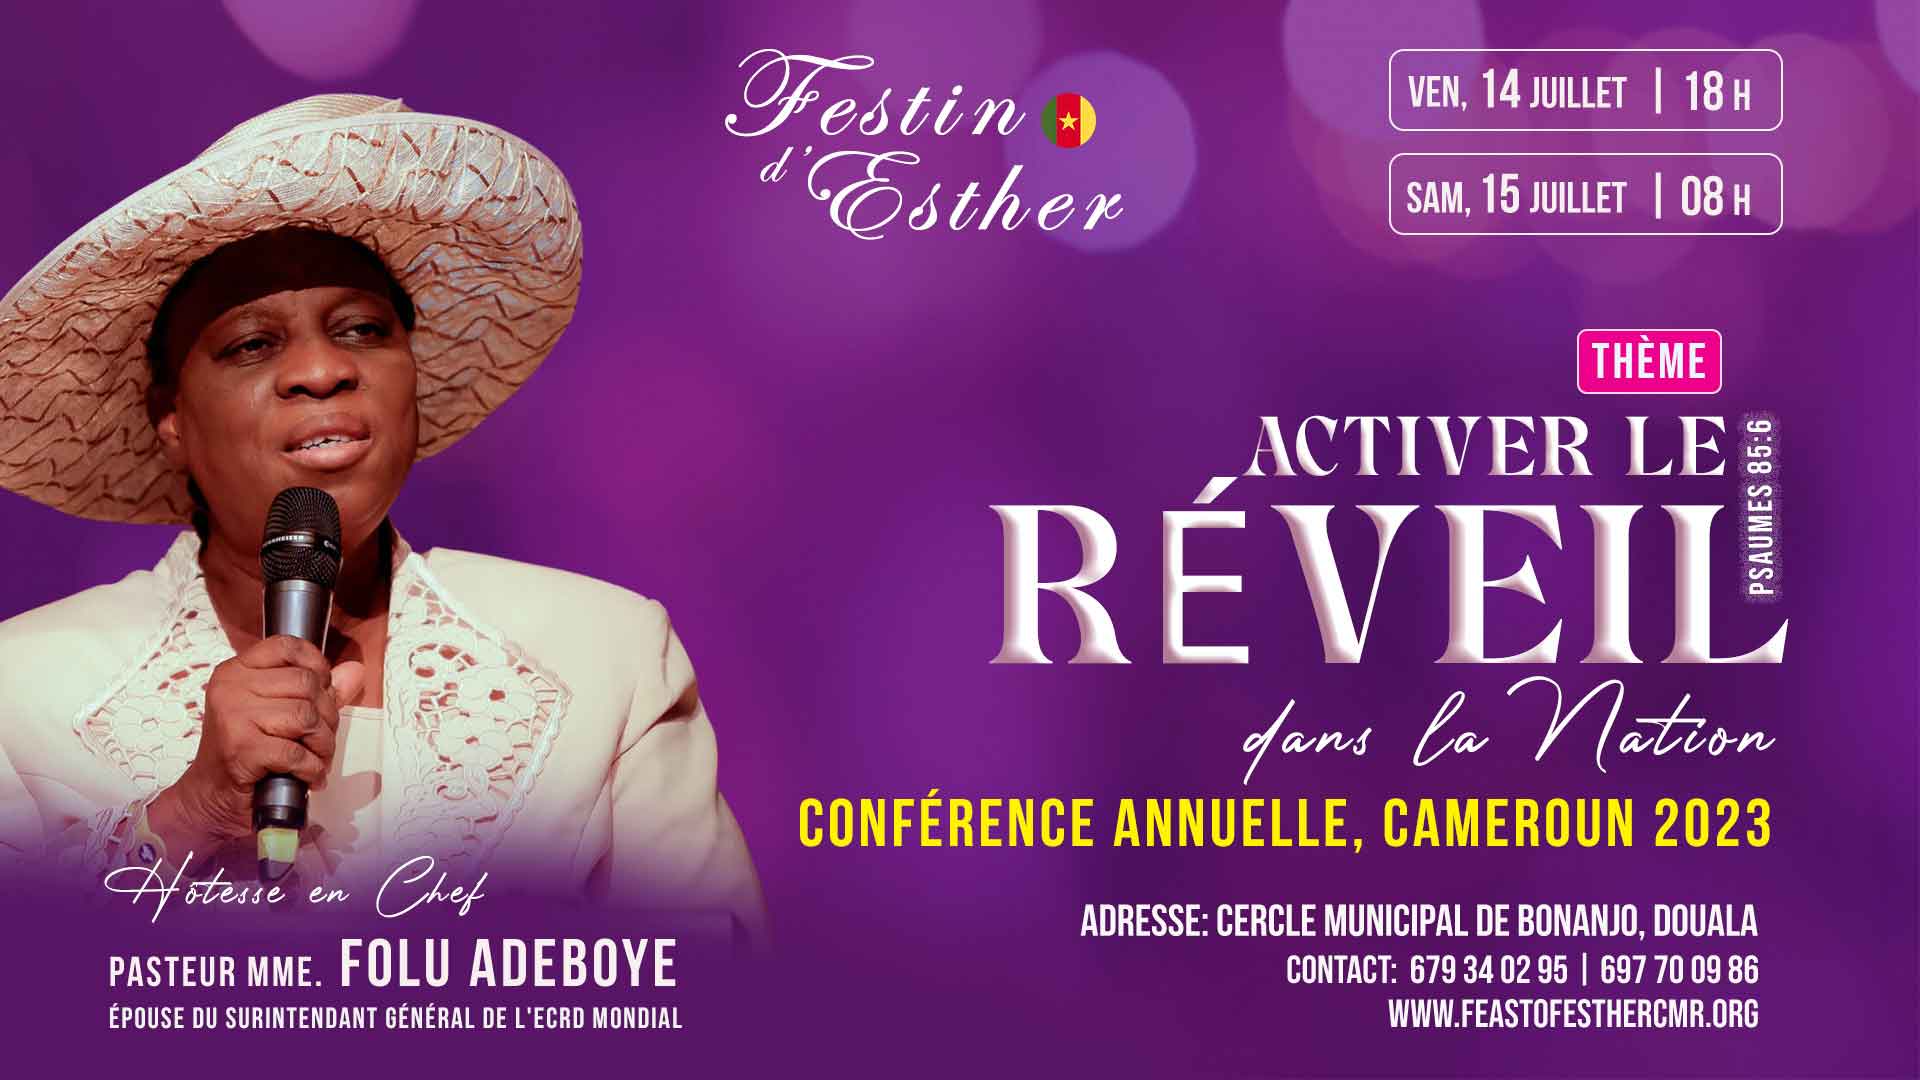 Festin d'Esther Cameroun 2023 flyer